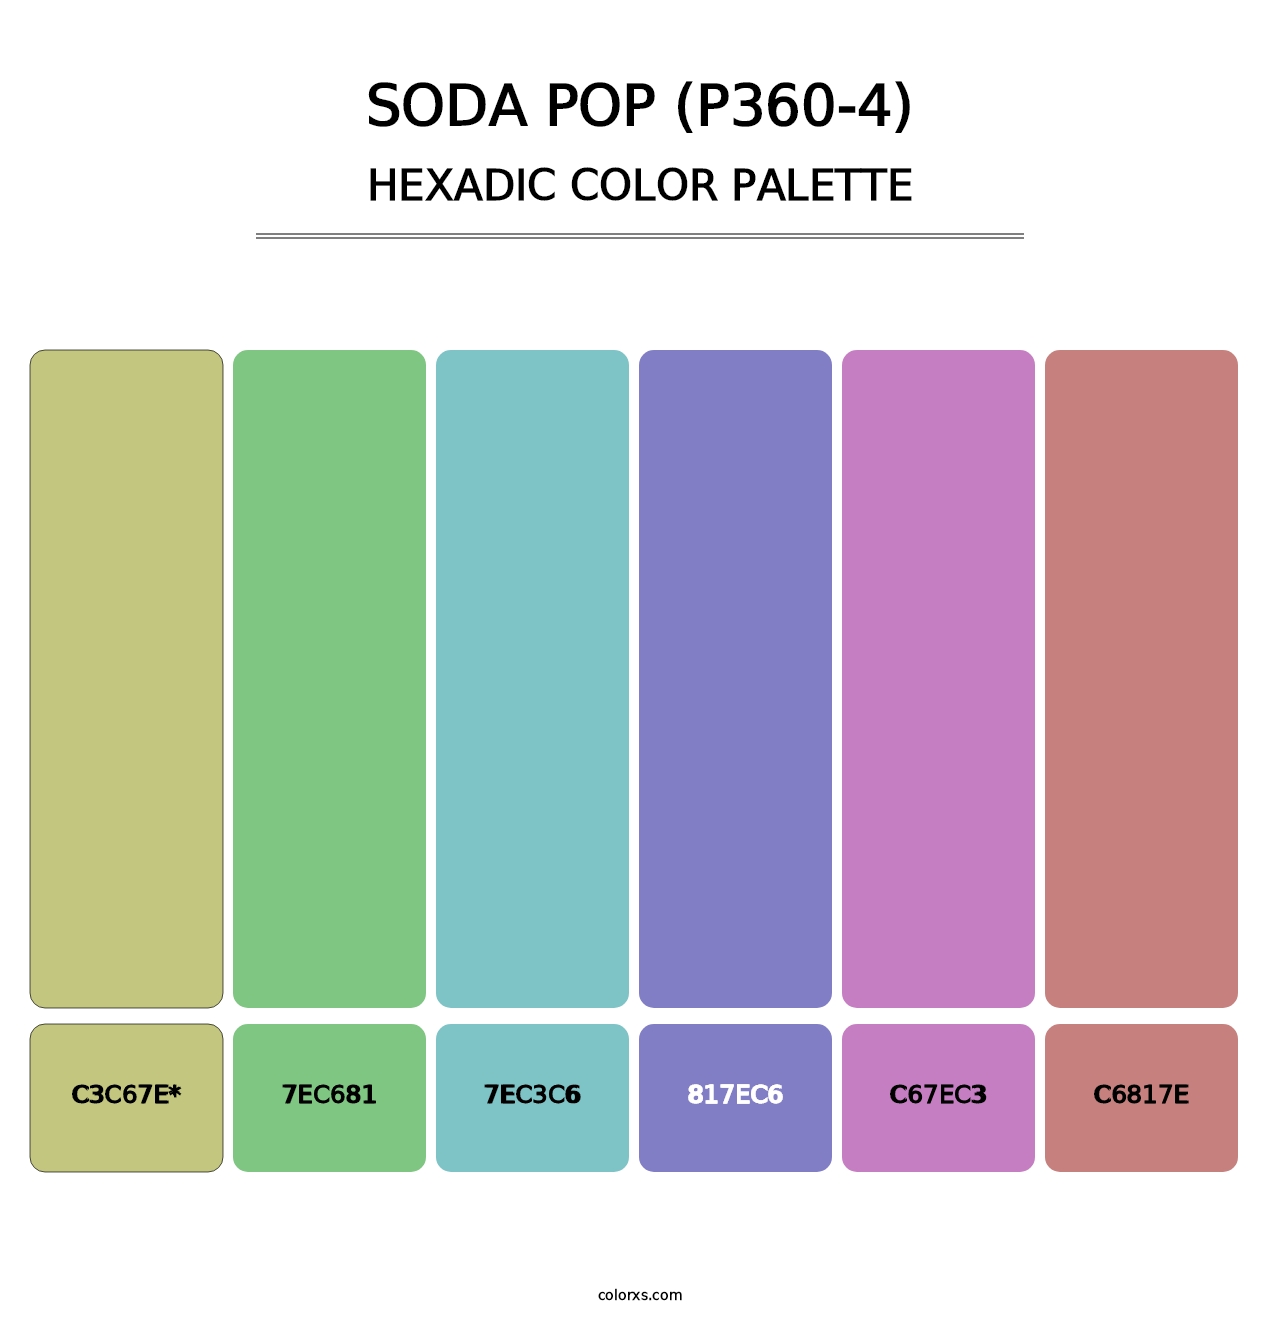 Soda Pop (P360-4) - Hexadic Color Palette